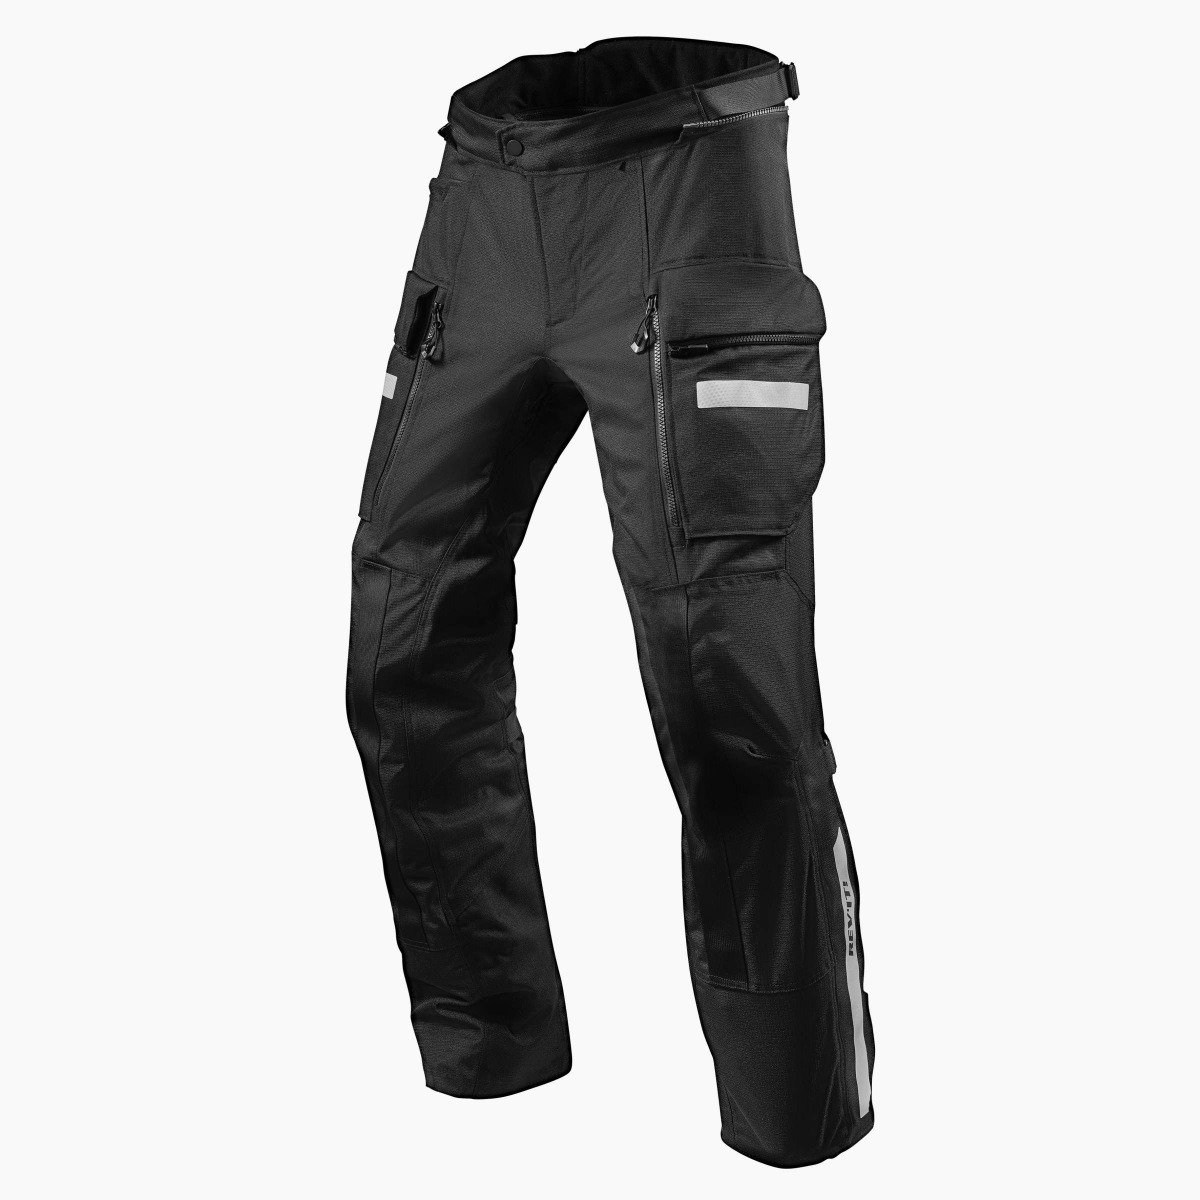 Image of REV'IT! Sand 4 H2O Standard Black Motorcycle Pants Talla 3XL